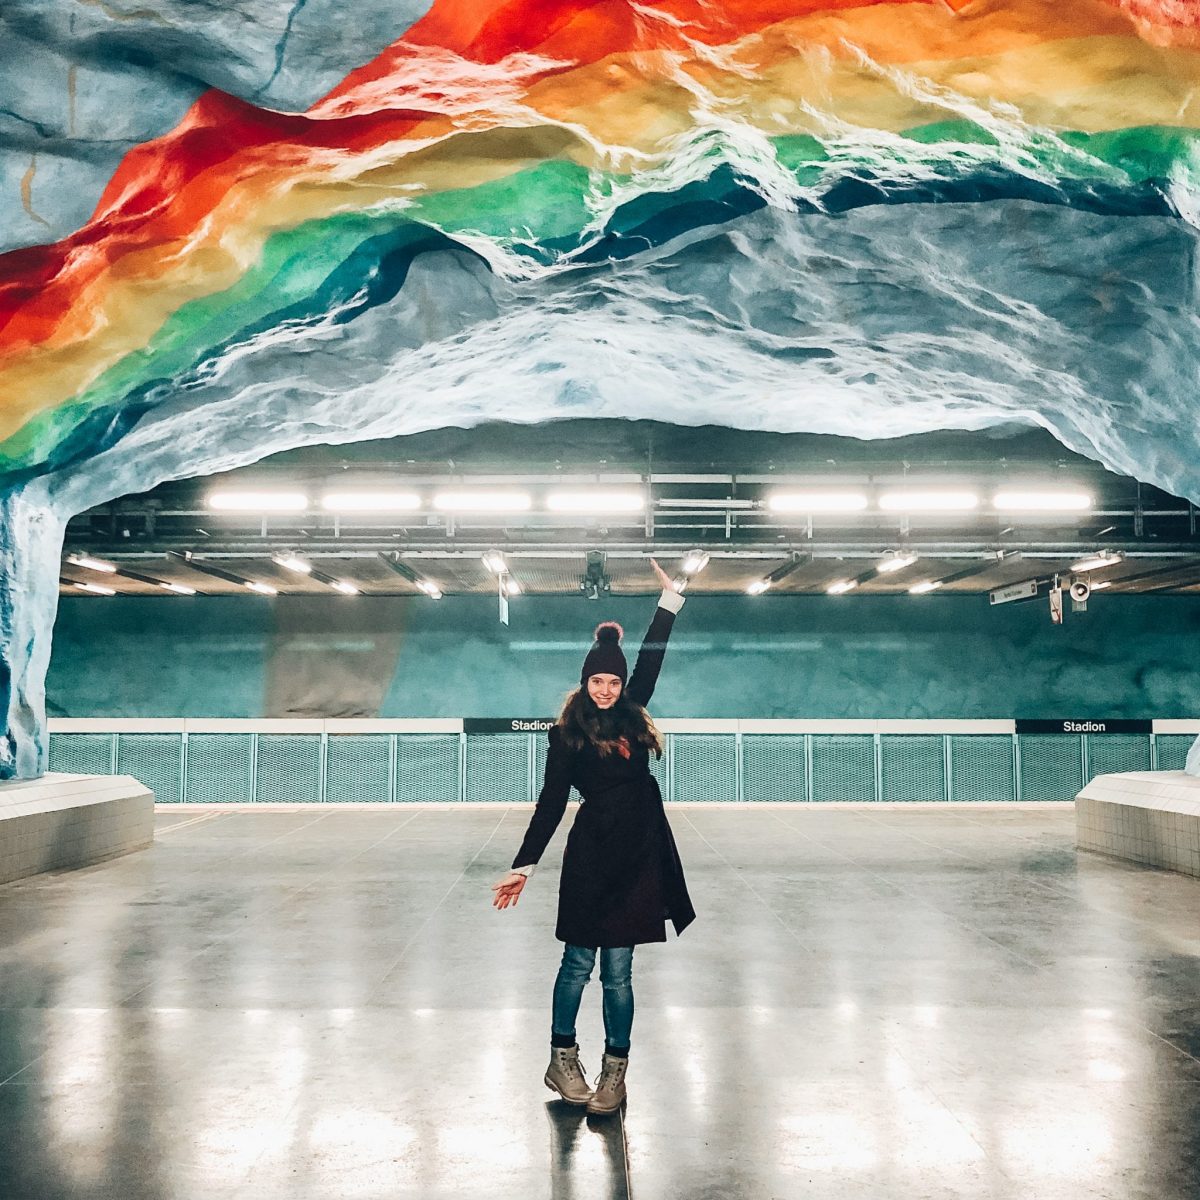 Stockholm Subway Art Rainbow Station